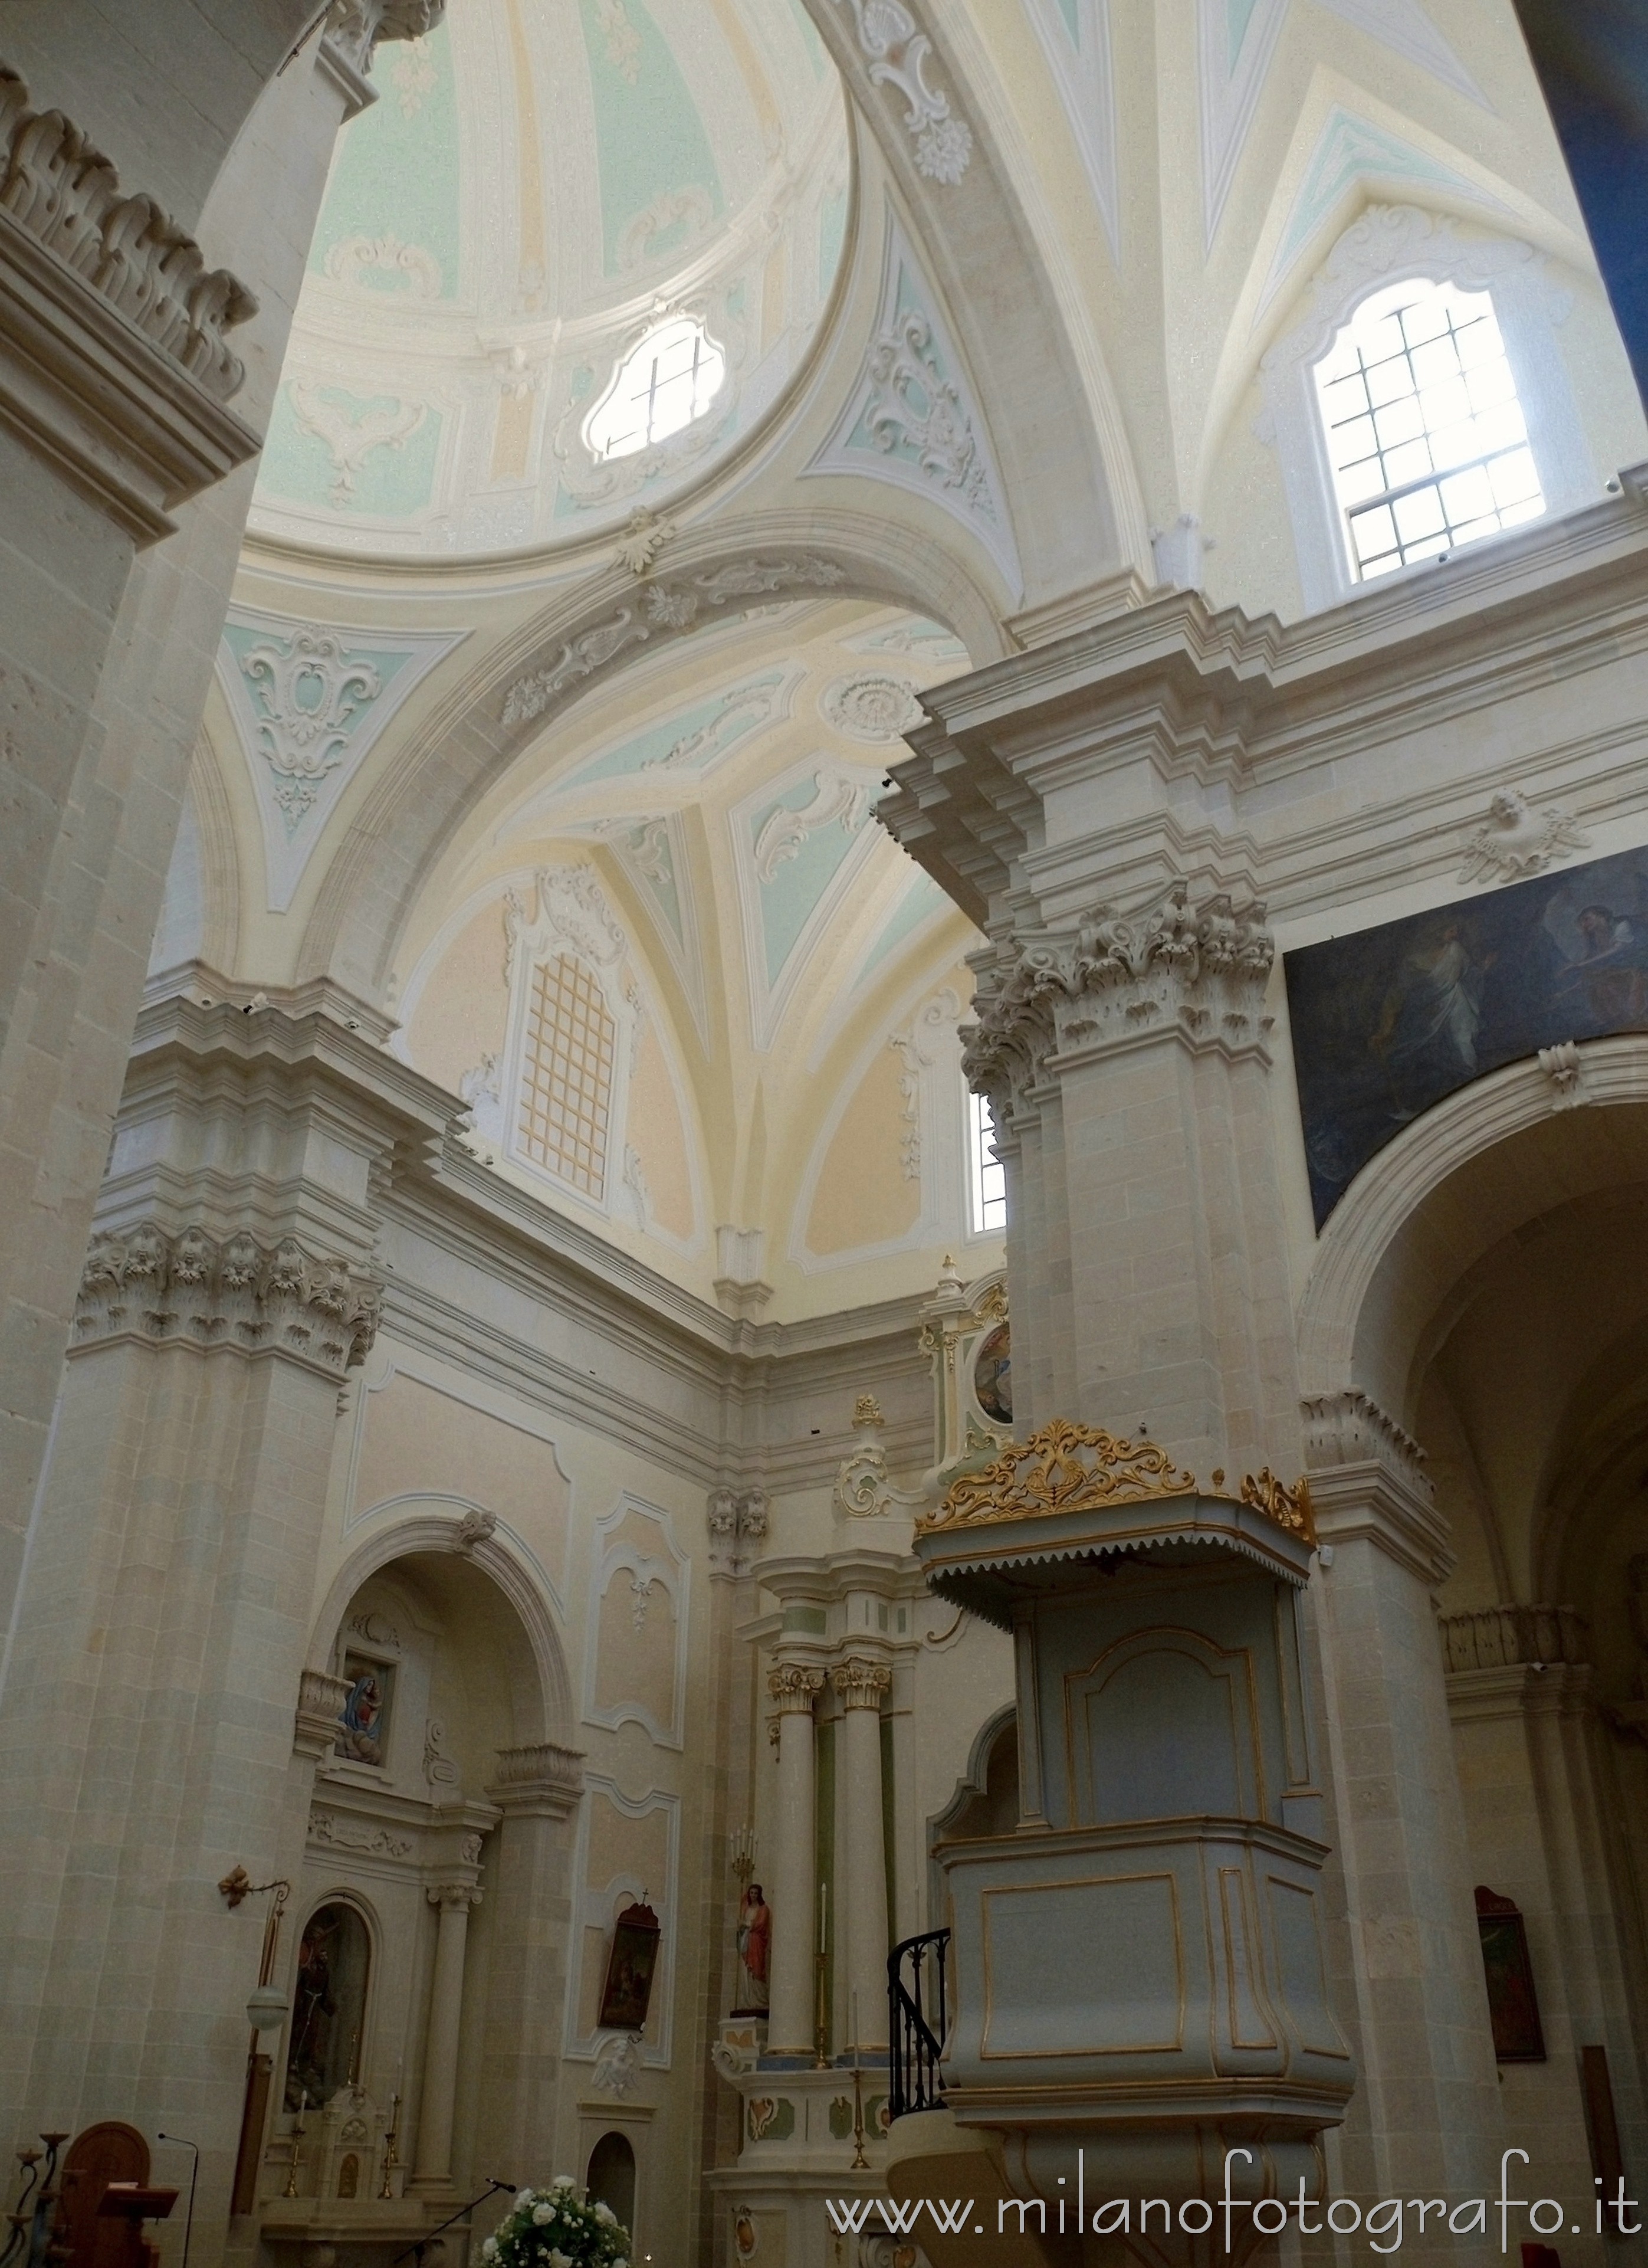 Uggiano La Chiesa (Lecce, Italy): Detail of the interior of the Church of Santa Maria Maddalena - Uggiano La Chiesa (Lecce, Italy)